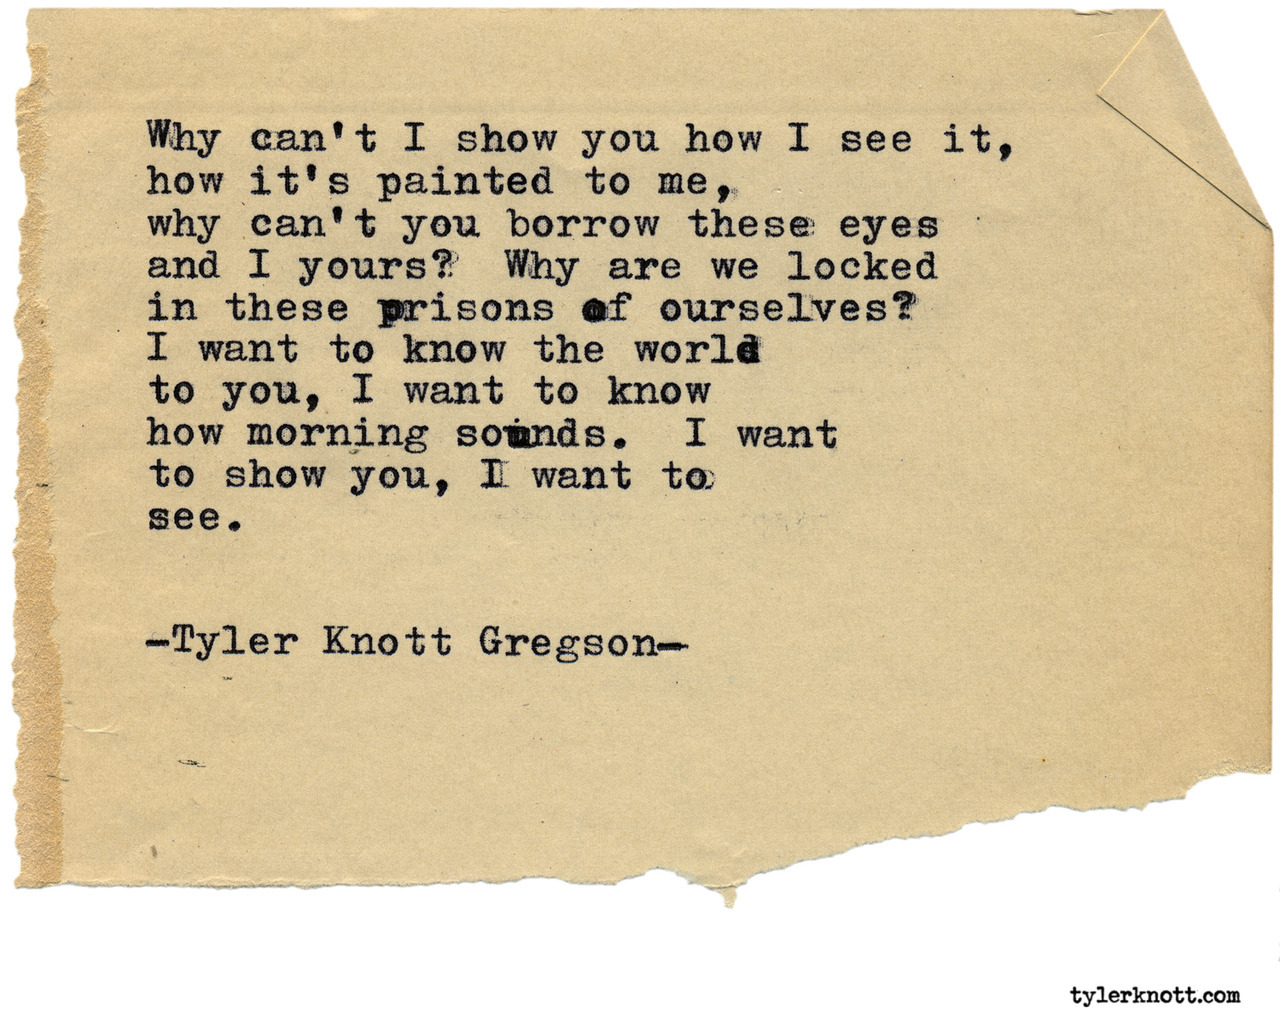 Tyler Knott Gregson